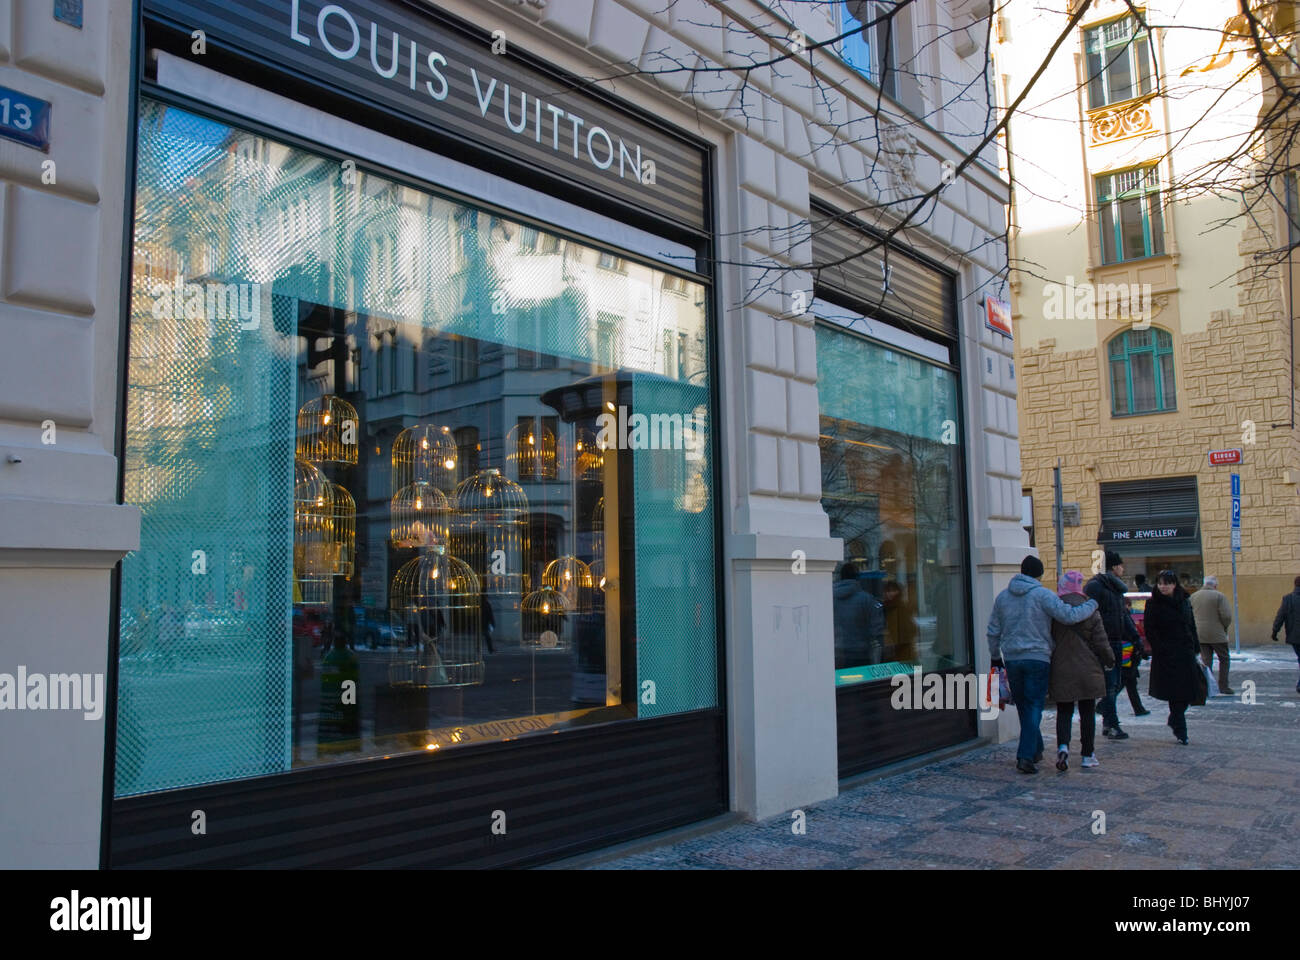 Louis Vuitton Eva Azur - Luxury Helsinki